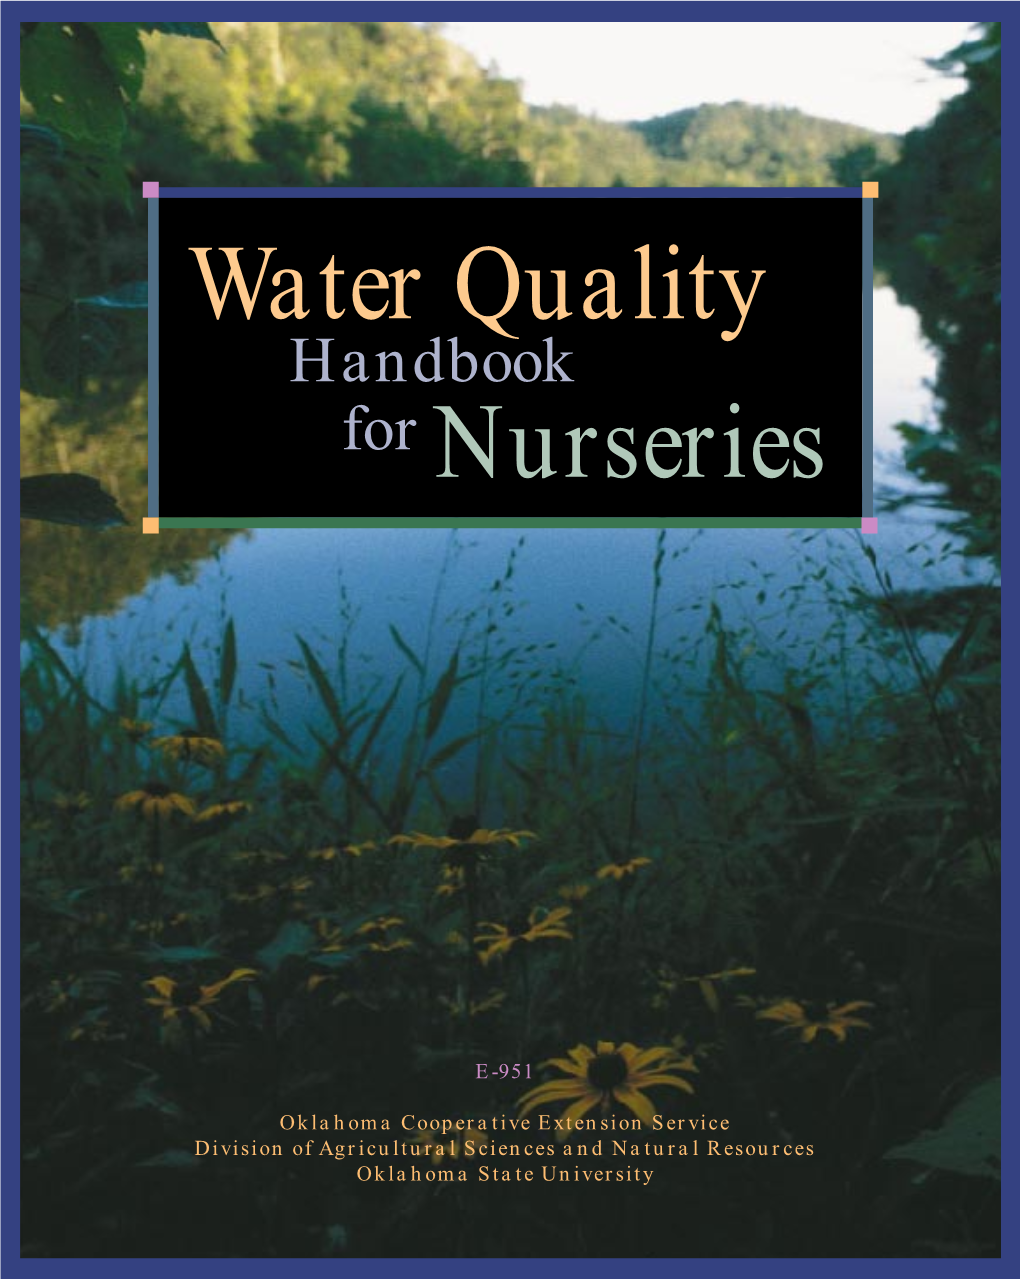 E-951, Water Quality Handbook for Nurseries